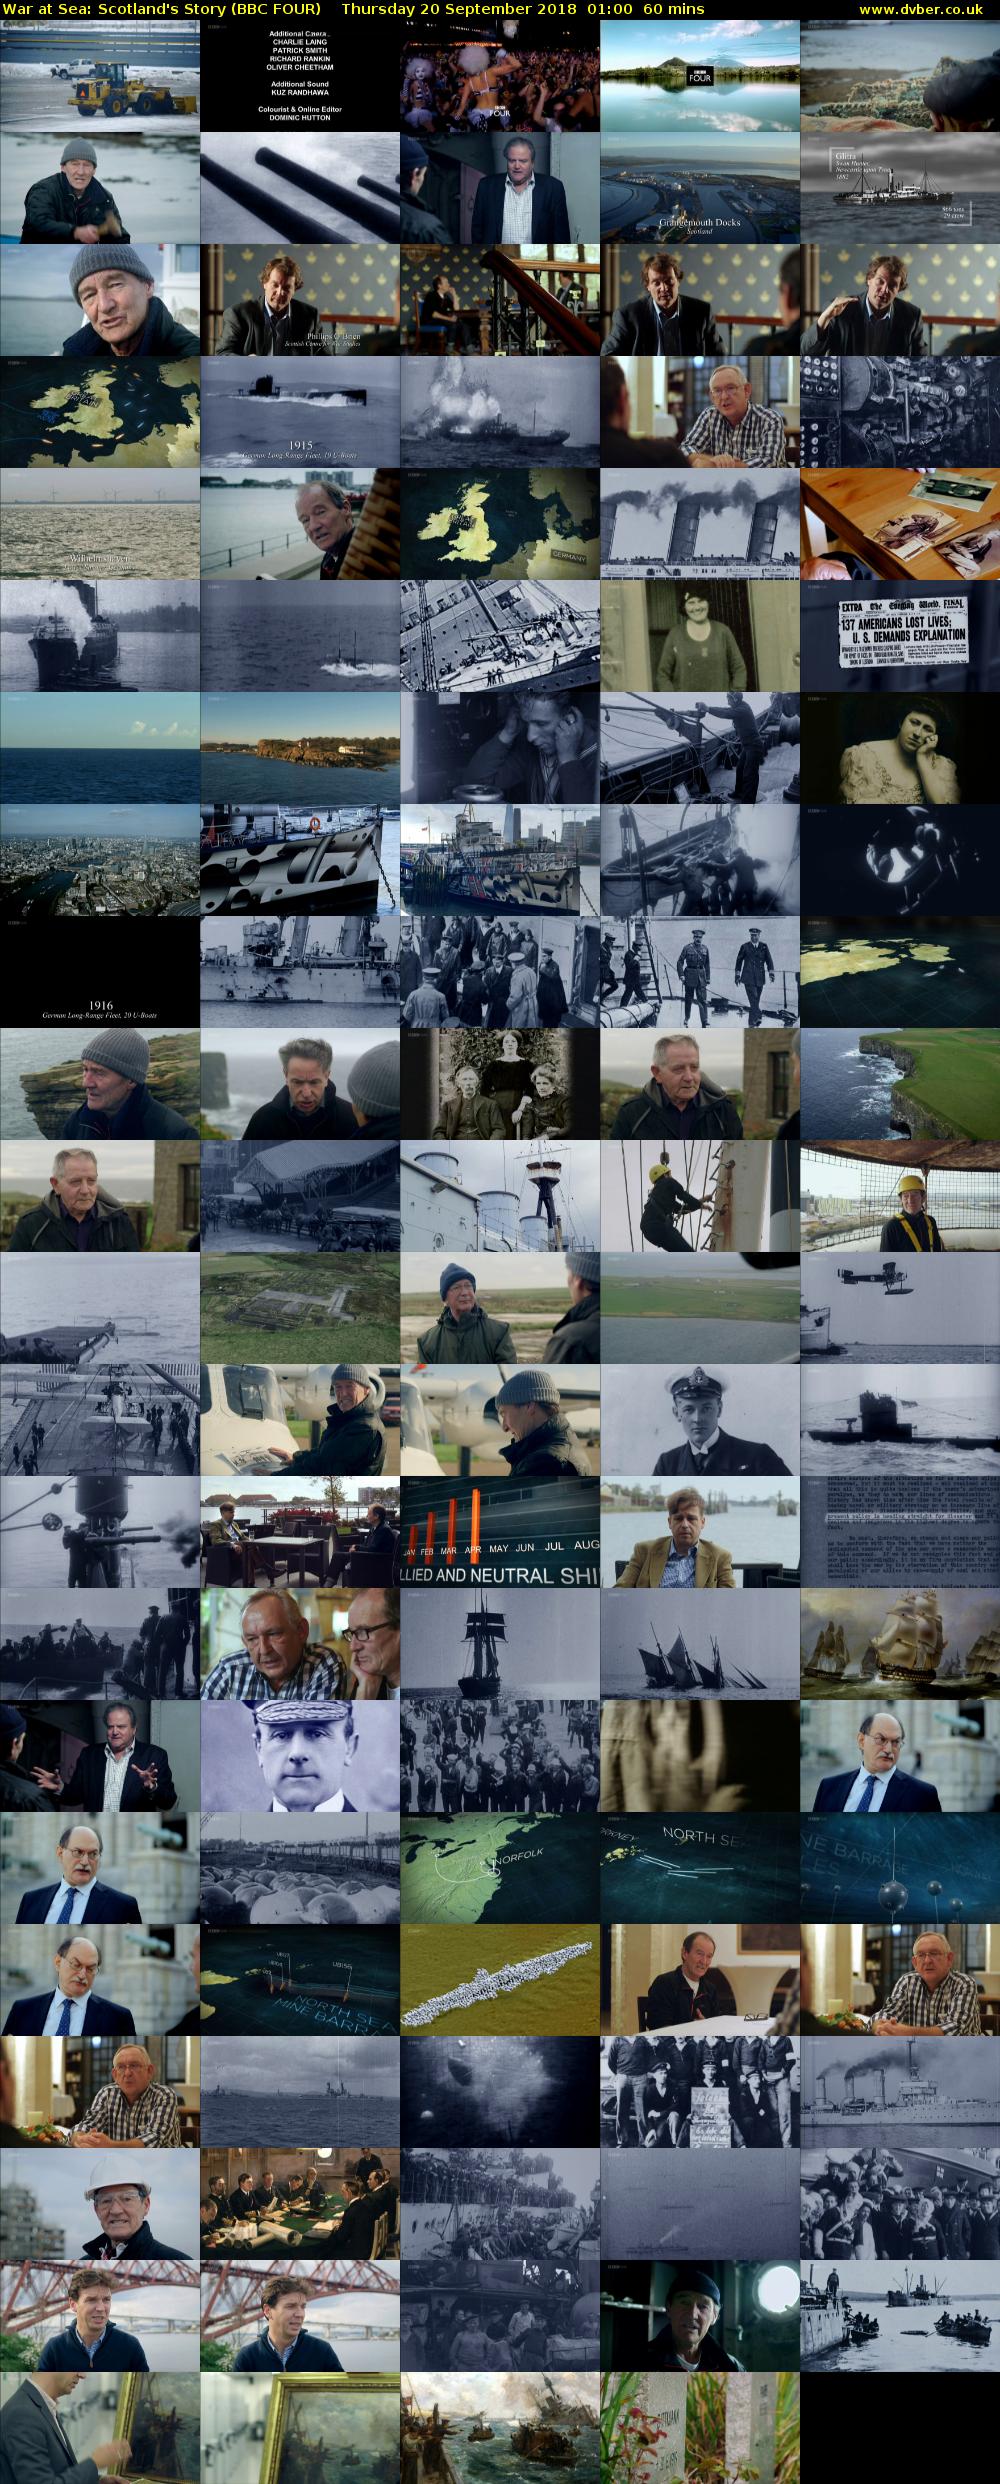 War at Sea: Scotland's Story (BBC FOUR) Thursday 20 September 2018 01:00 - 02:00